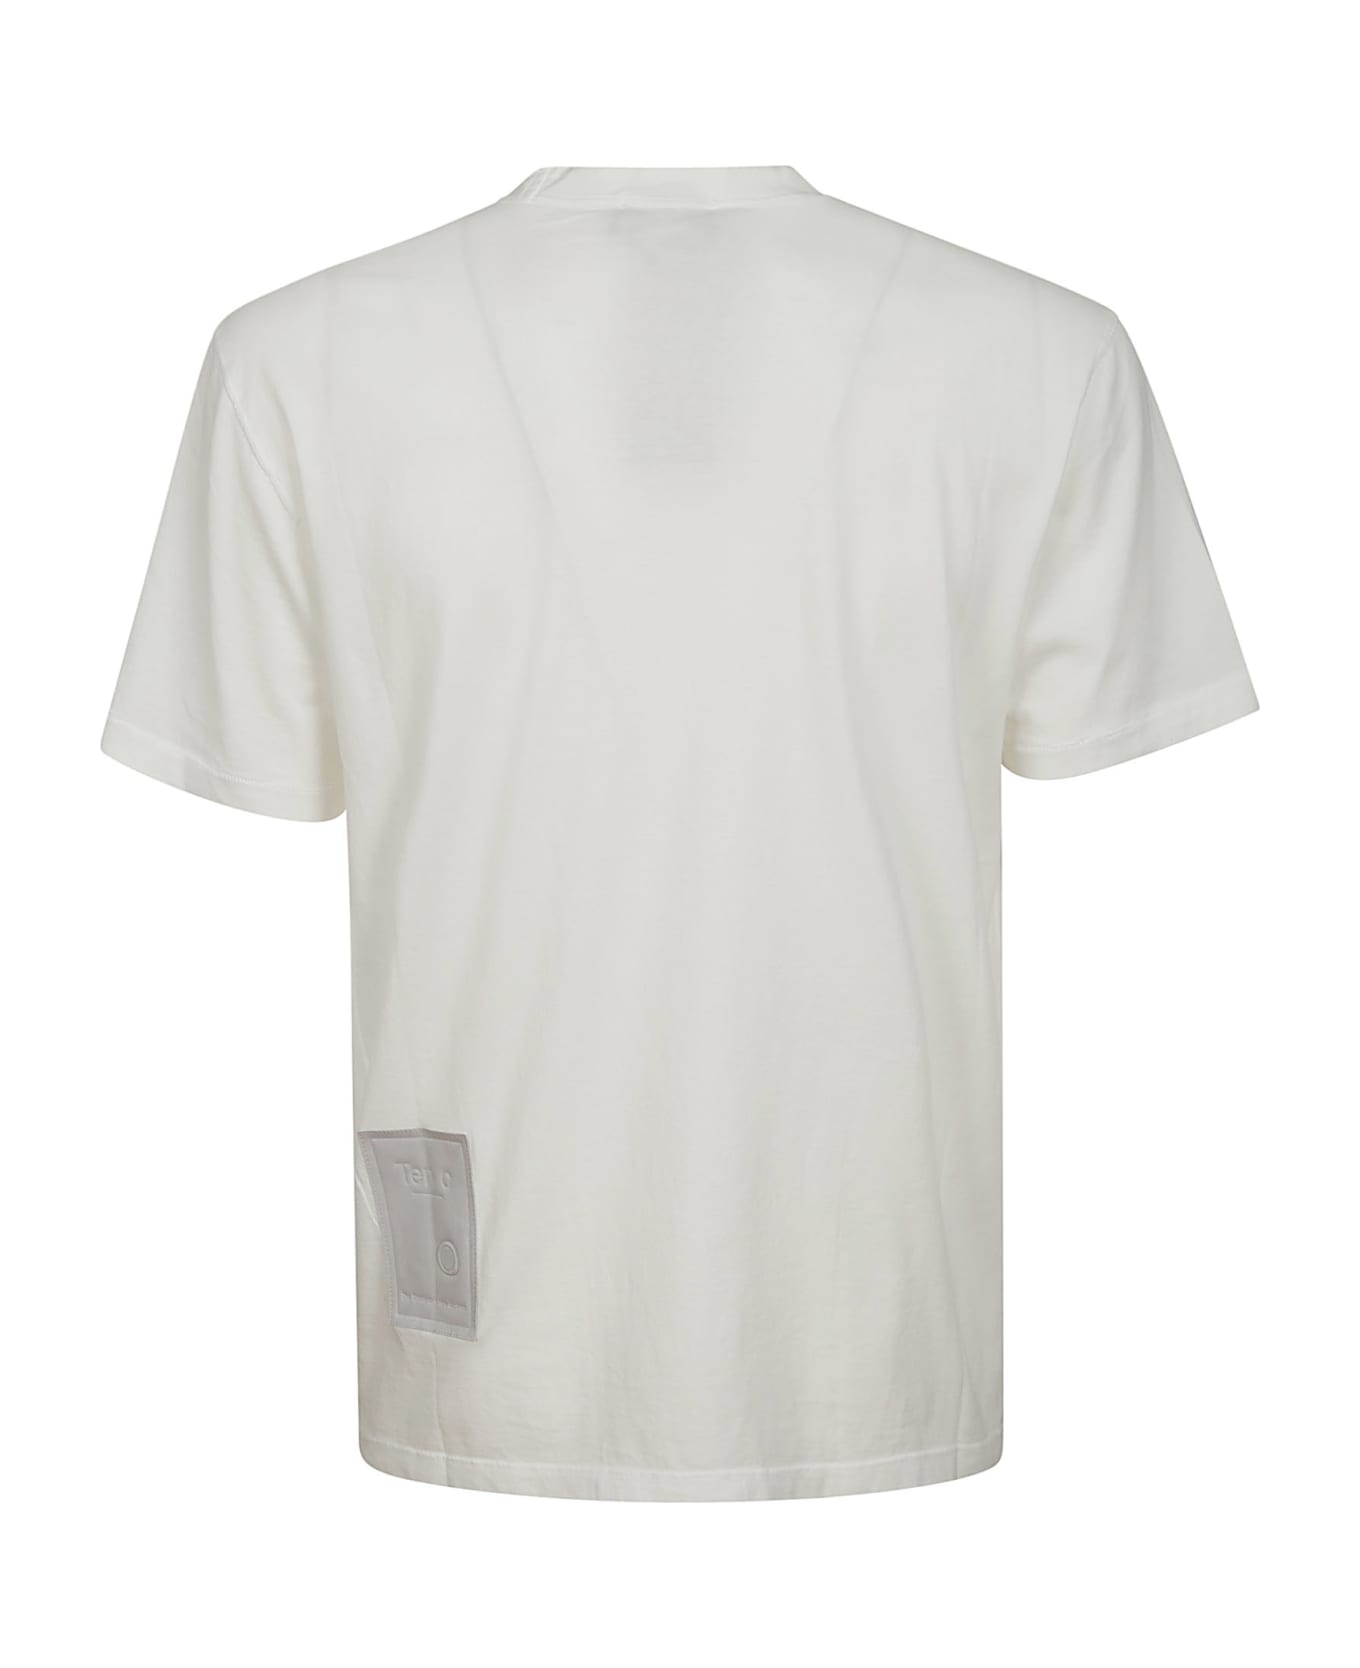 Ten C Tshirt - White